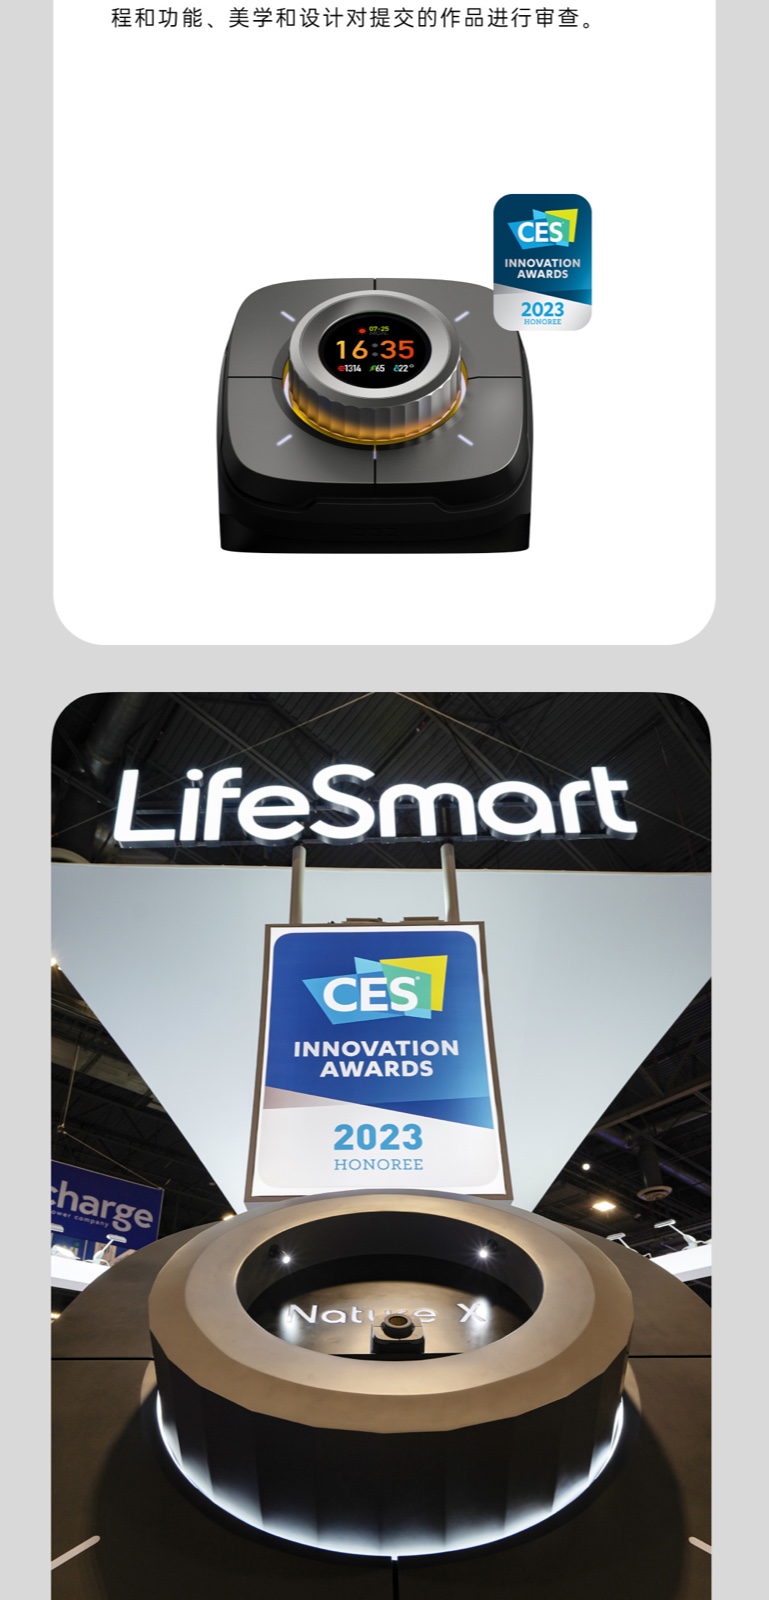 CES 2023，LifeSmart云起闪耀Las Vegas